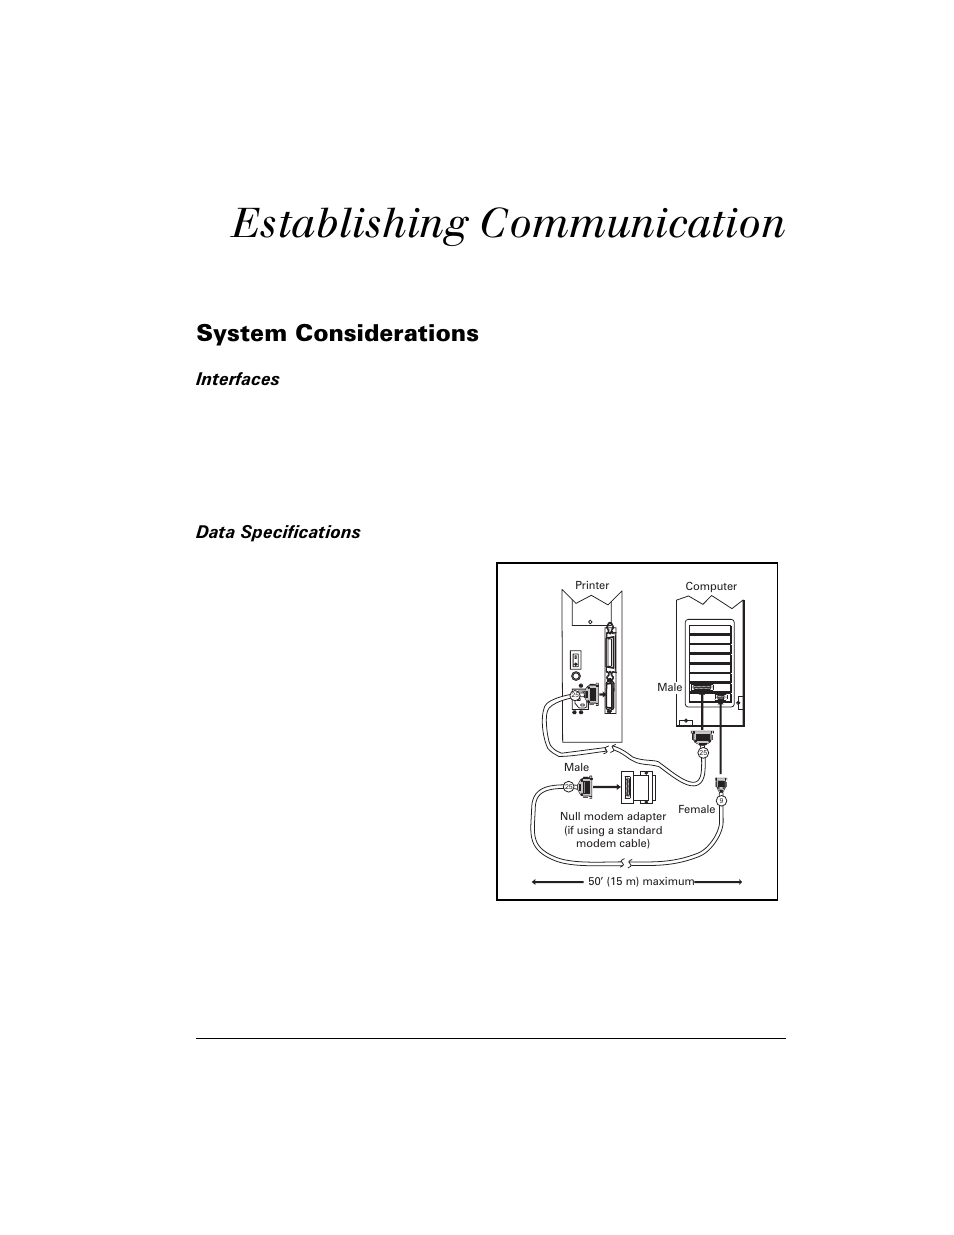 Establishing communication, System considerations, Interfaces data